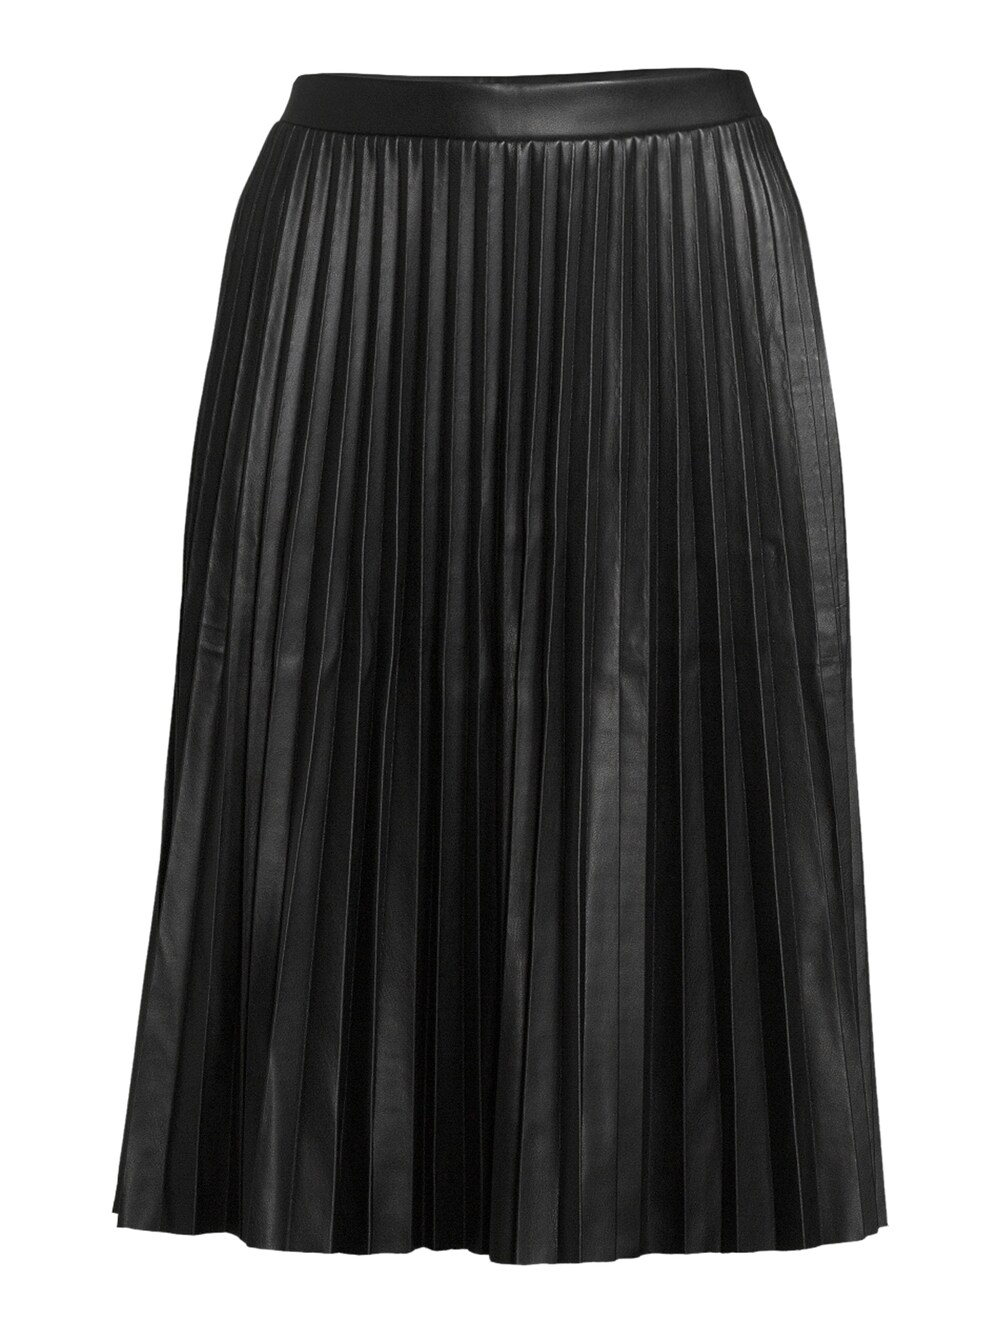 Юбка Orsay, черный юбка orsay светлая 44 размер